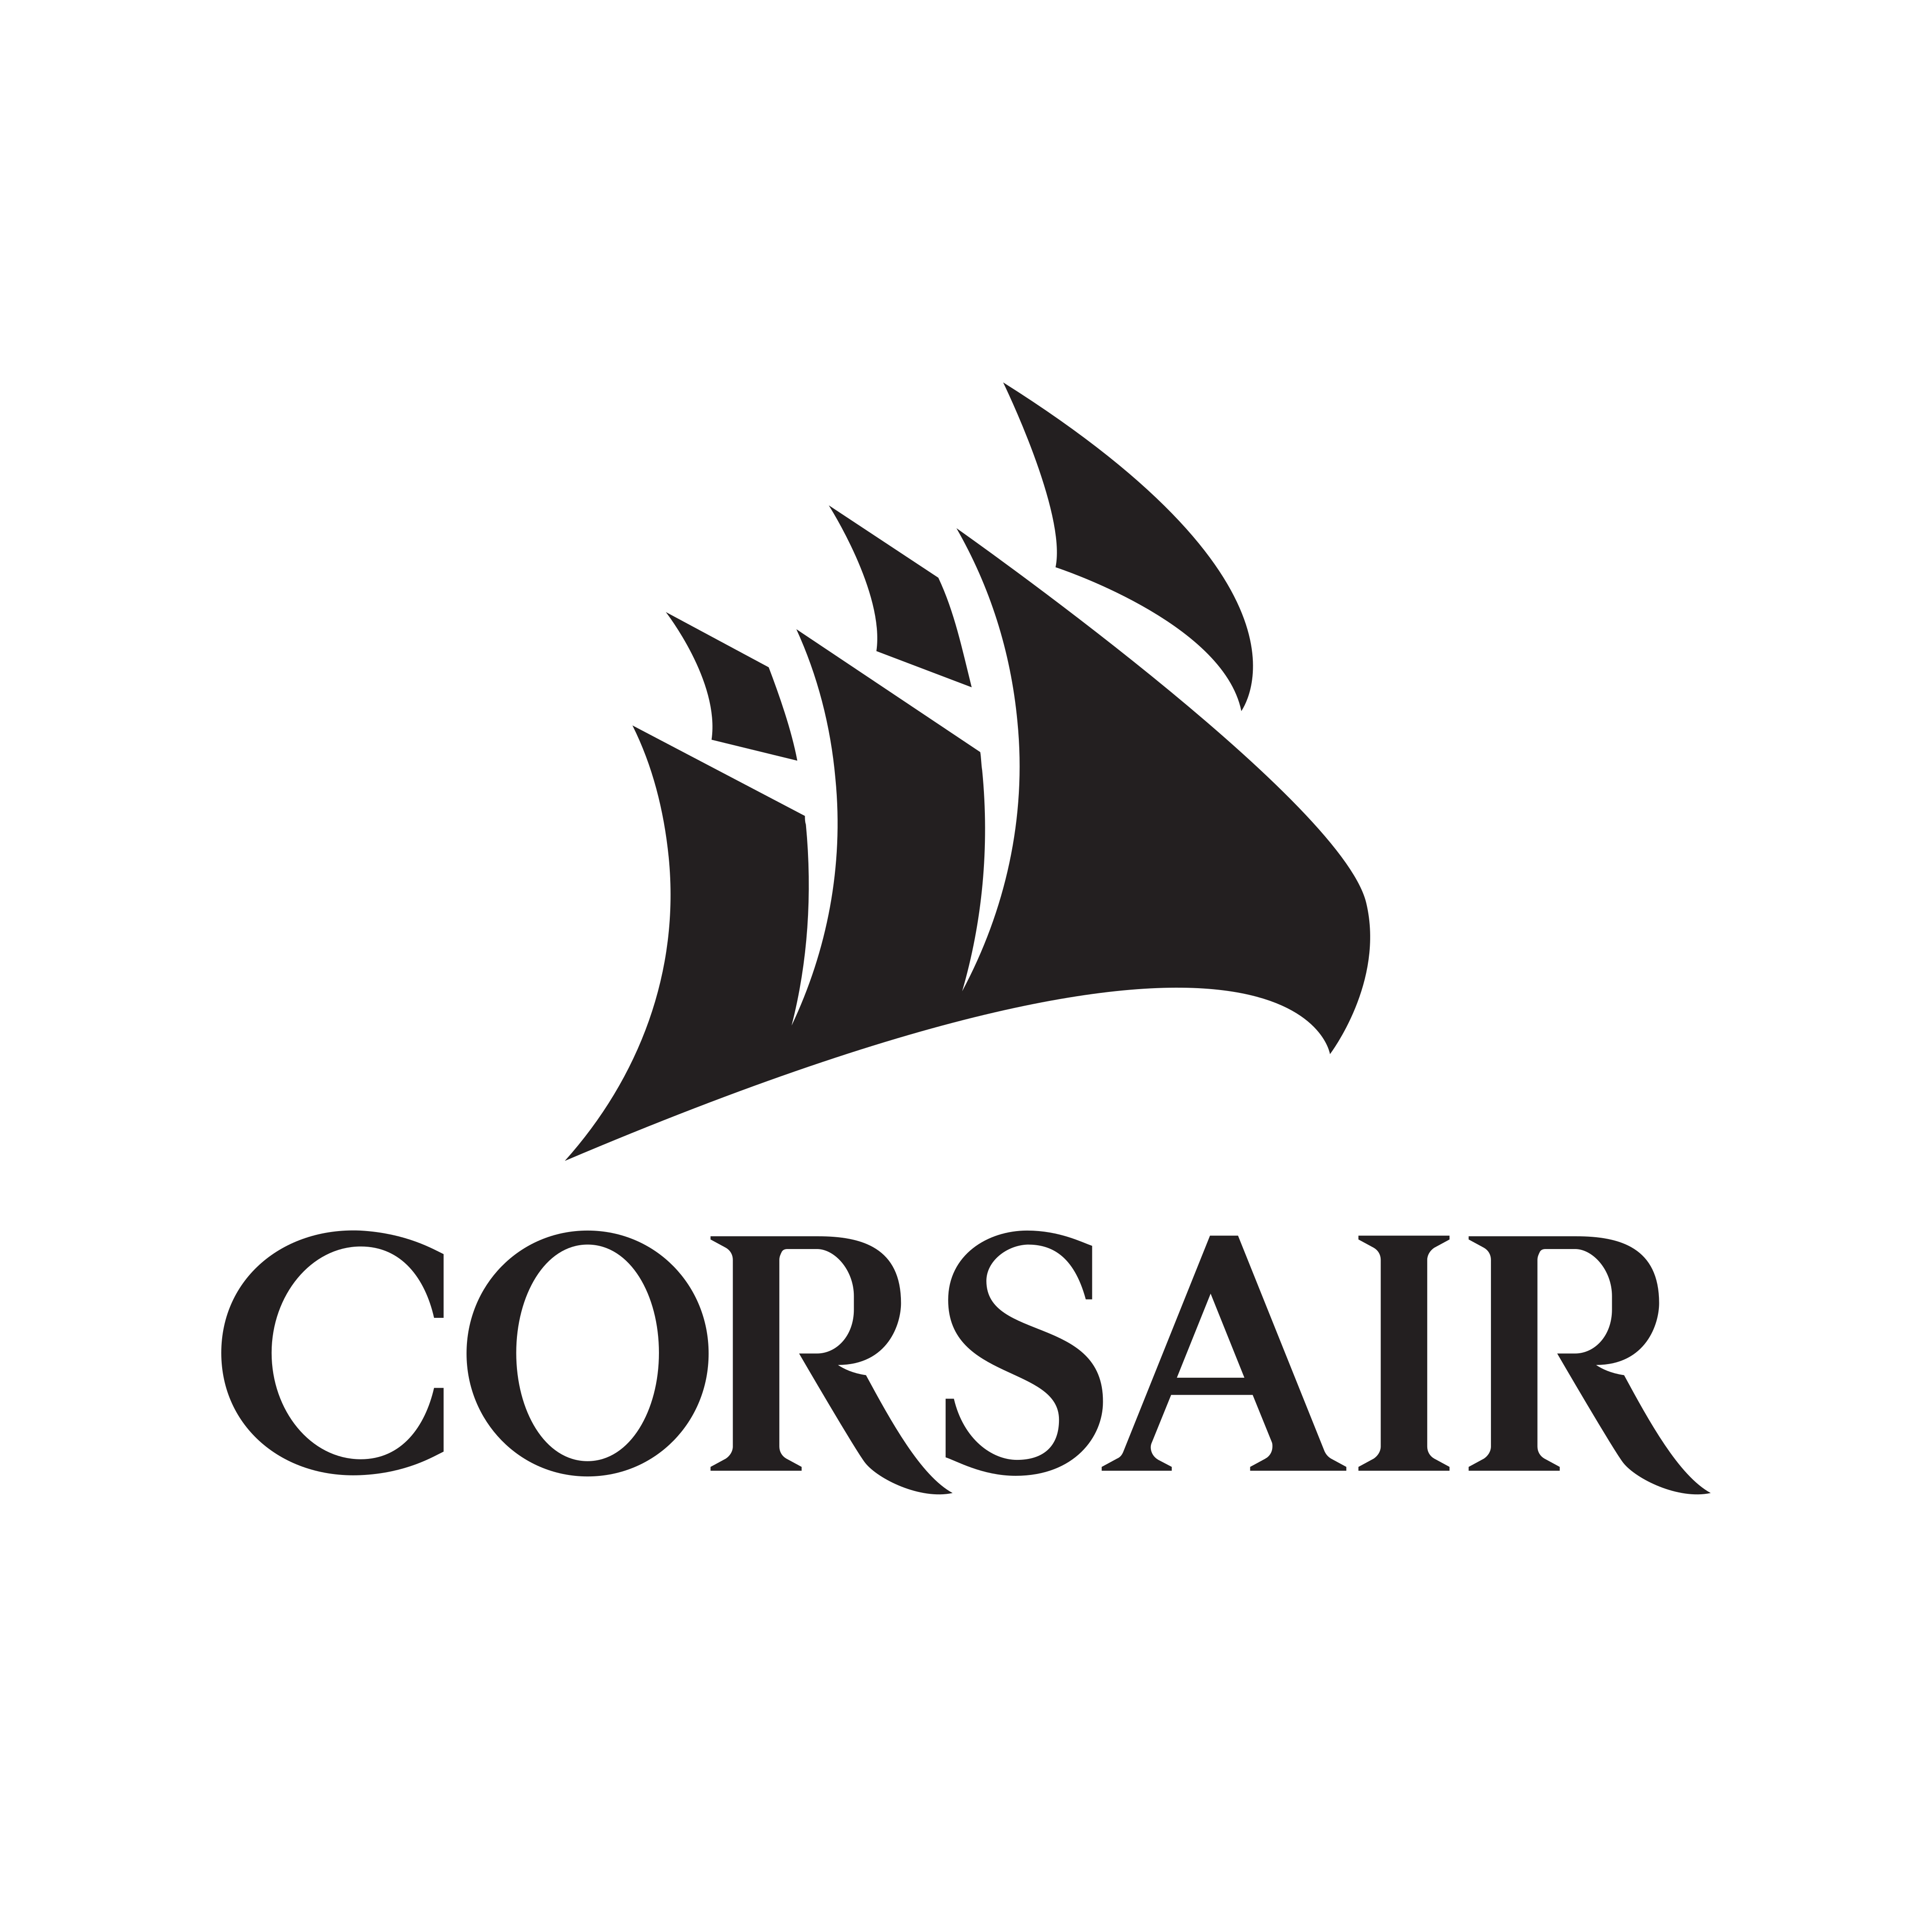 Corsair PNG Transparent